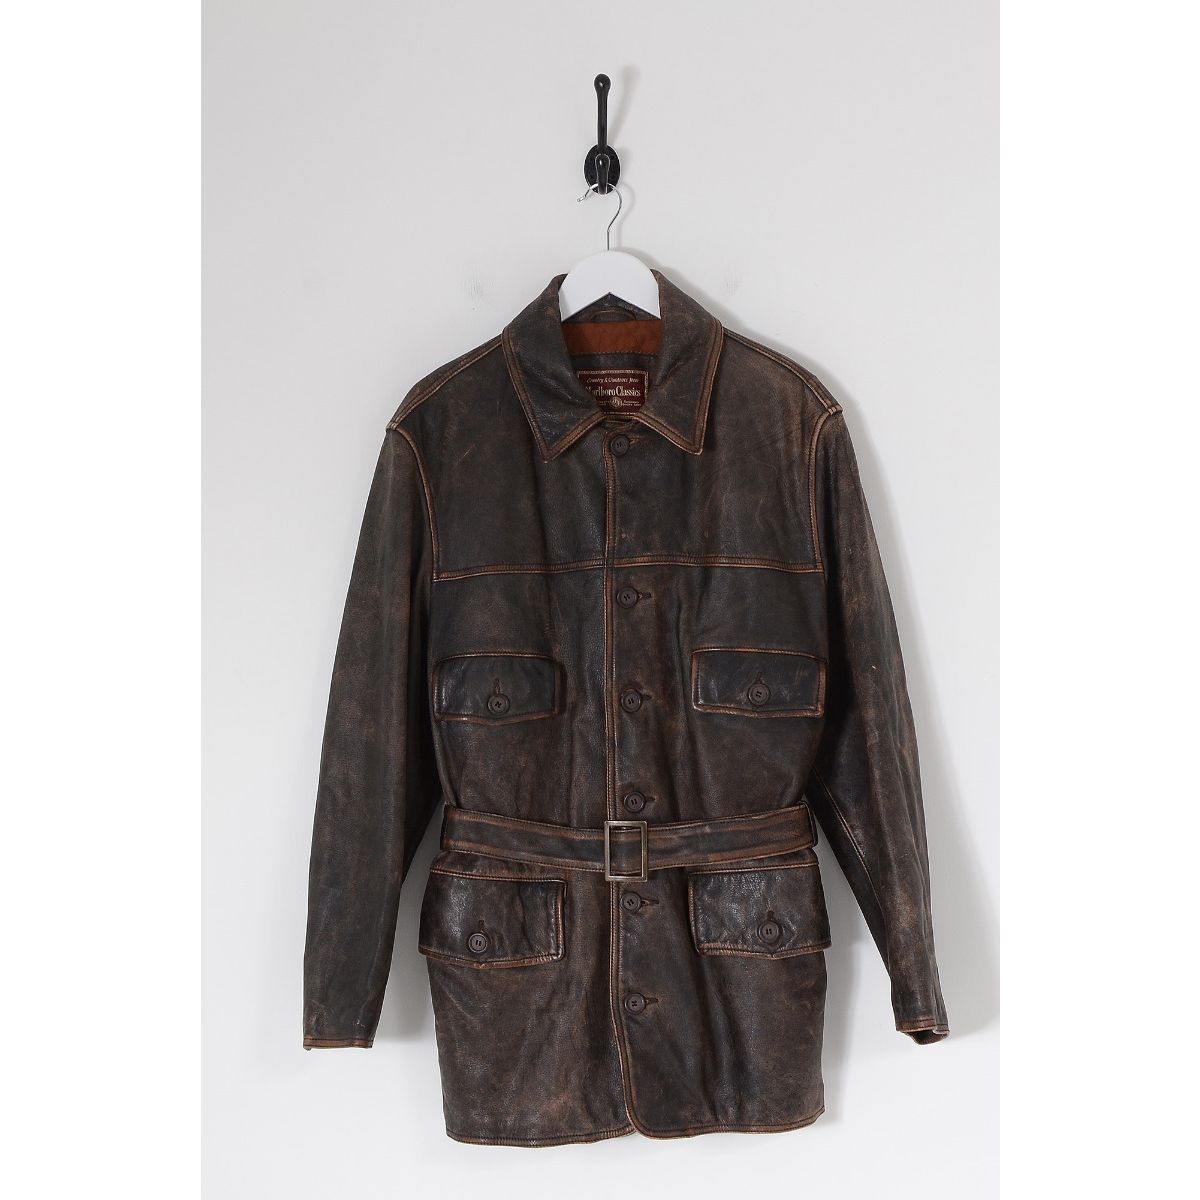 Marlboro Classics Leather Jacket vintage 80s brown motorcycle blazer jacket  outerwear men gift idea men leather jacket clothing size large